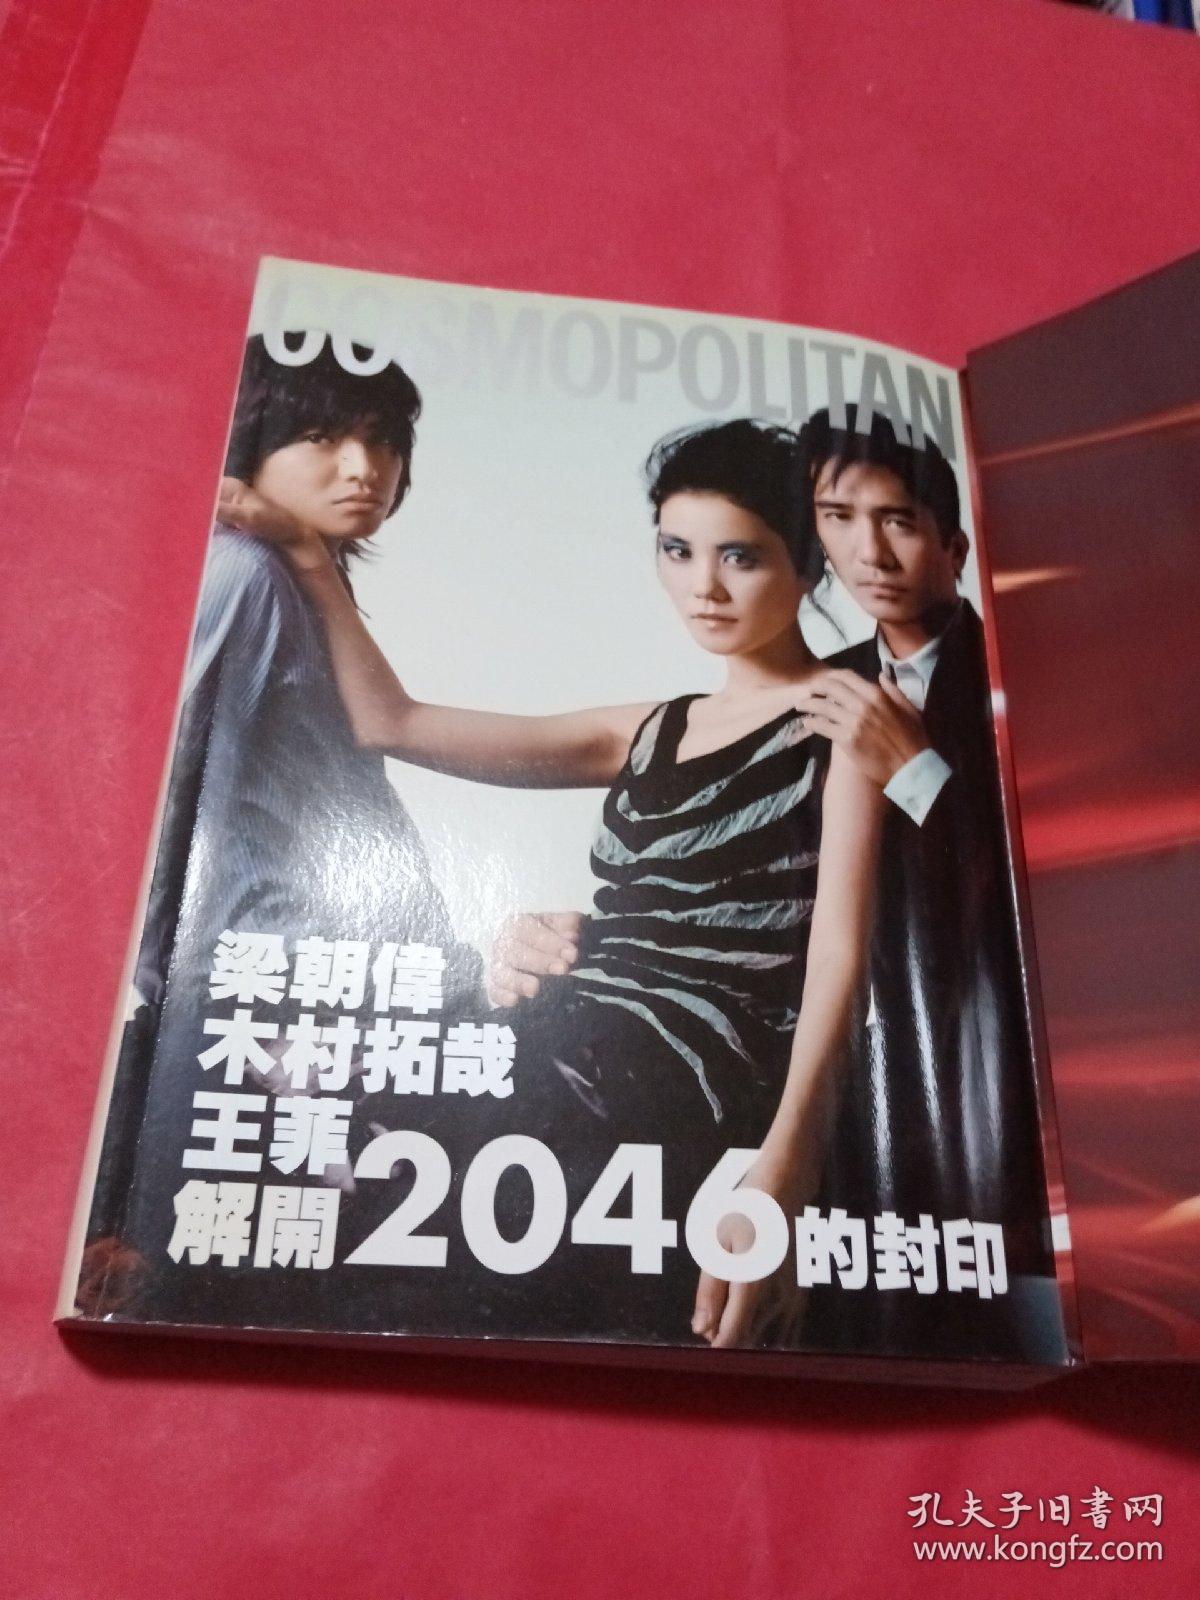 cosmopolitan 中文版 2004 王菲